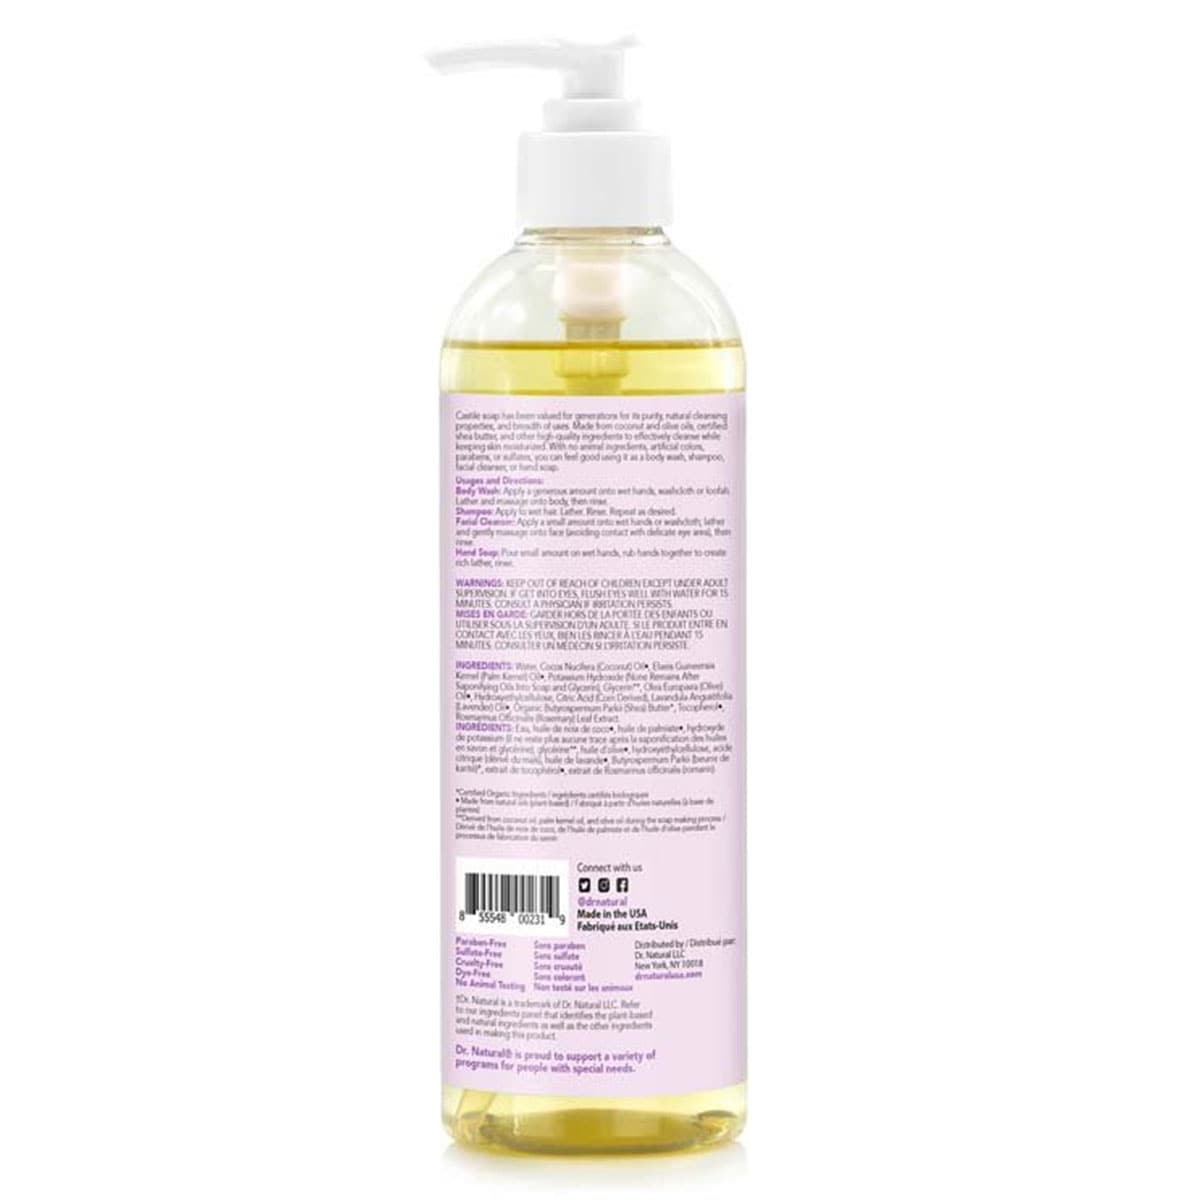 Dr. Natural Castile Liquid Soap Lavender 473ml